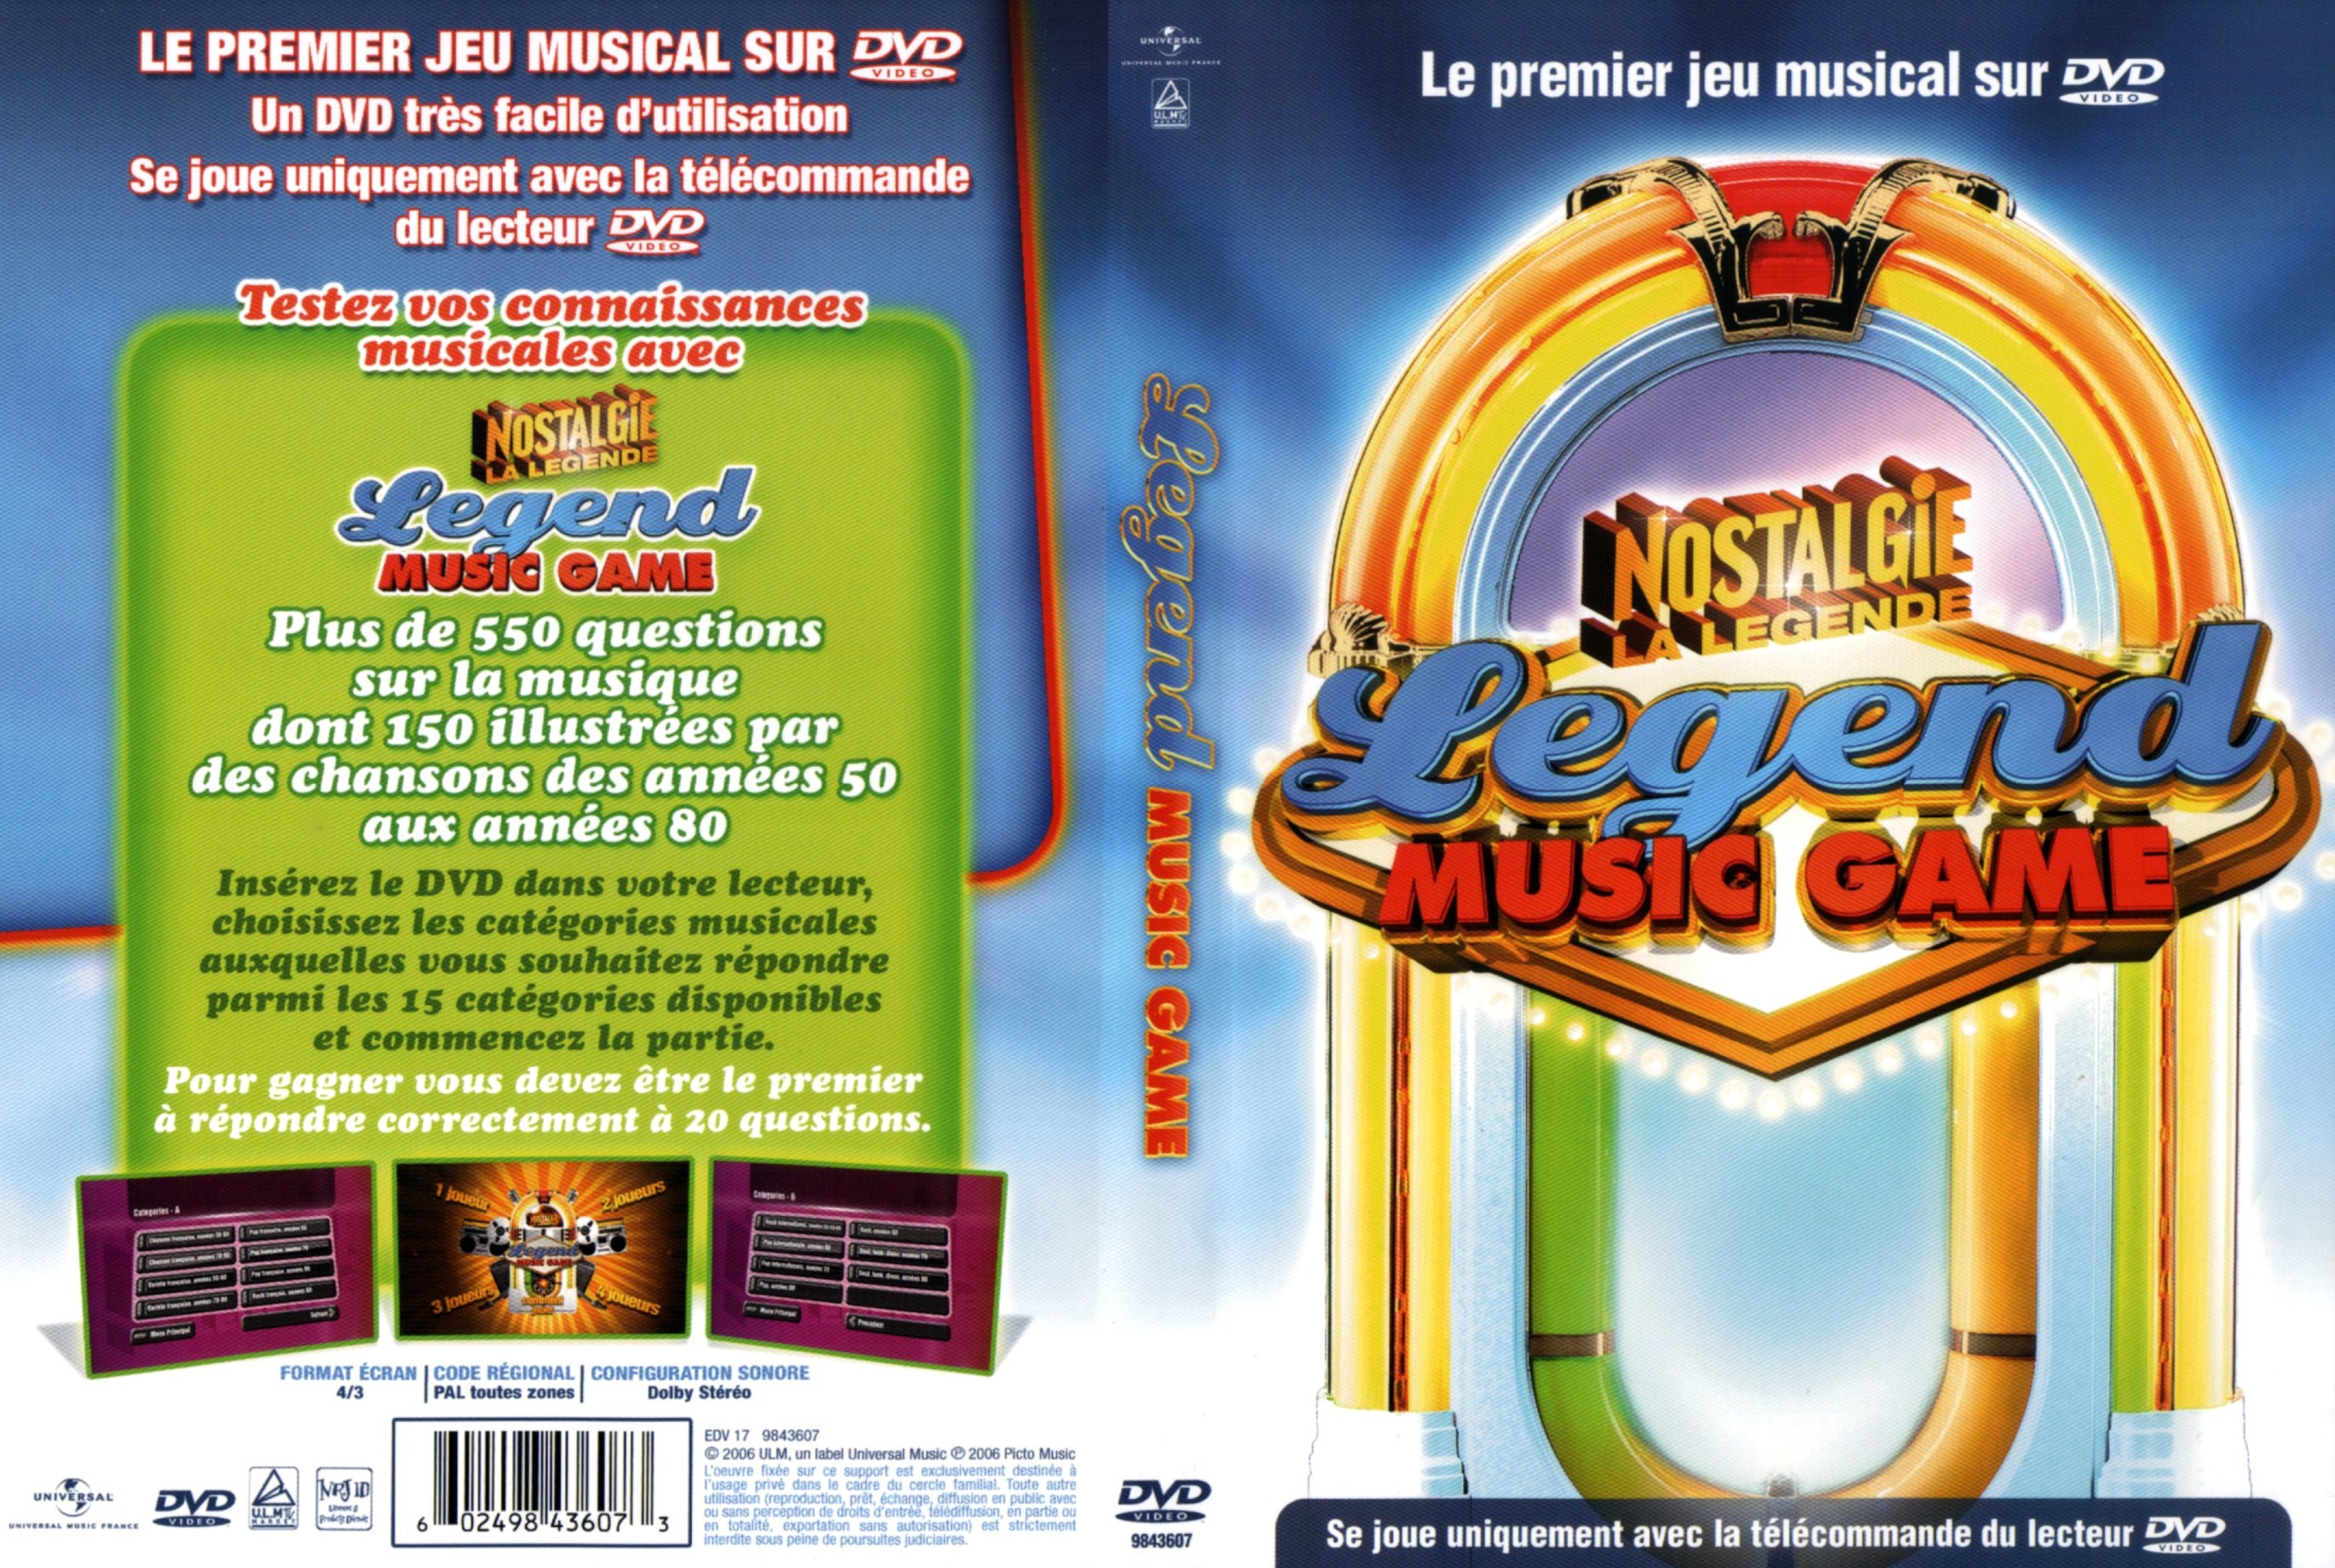 Jaquette DVD Nostalgie la legende